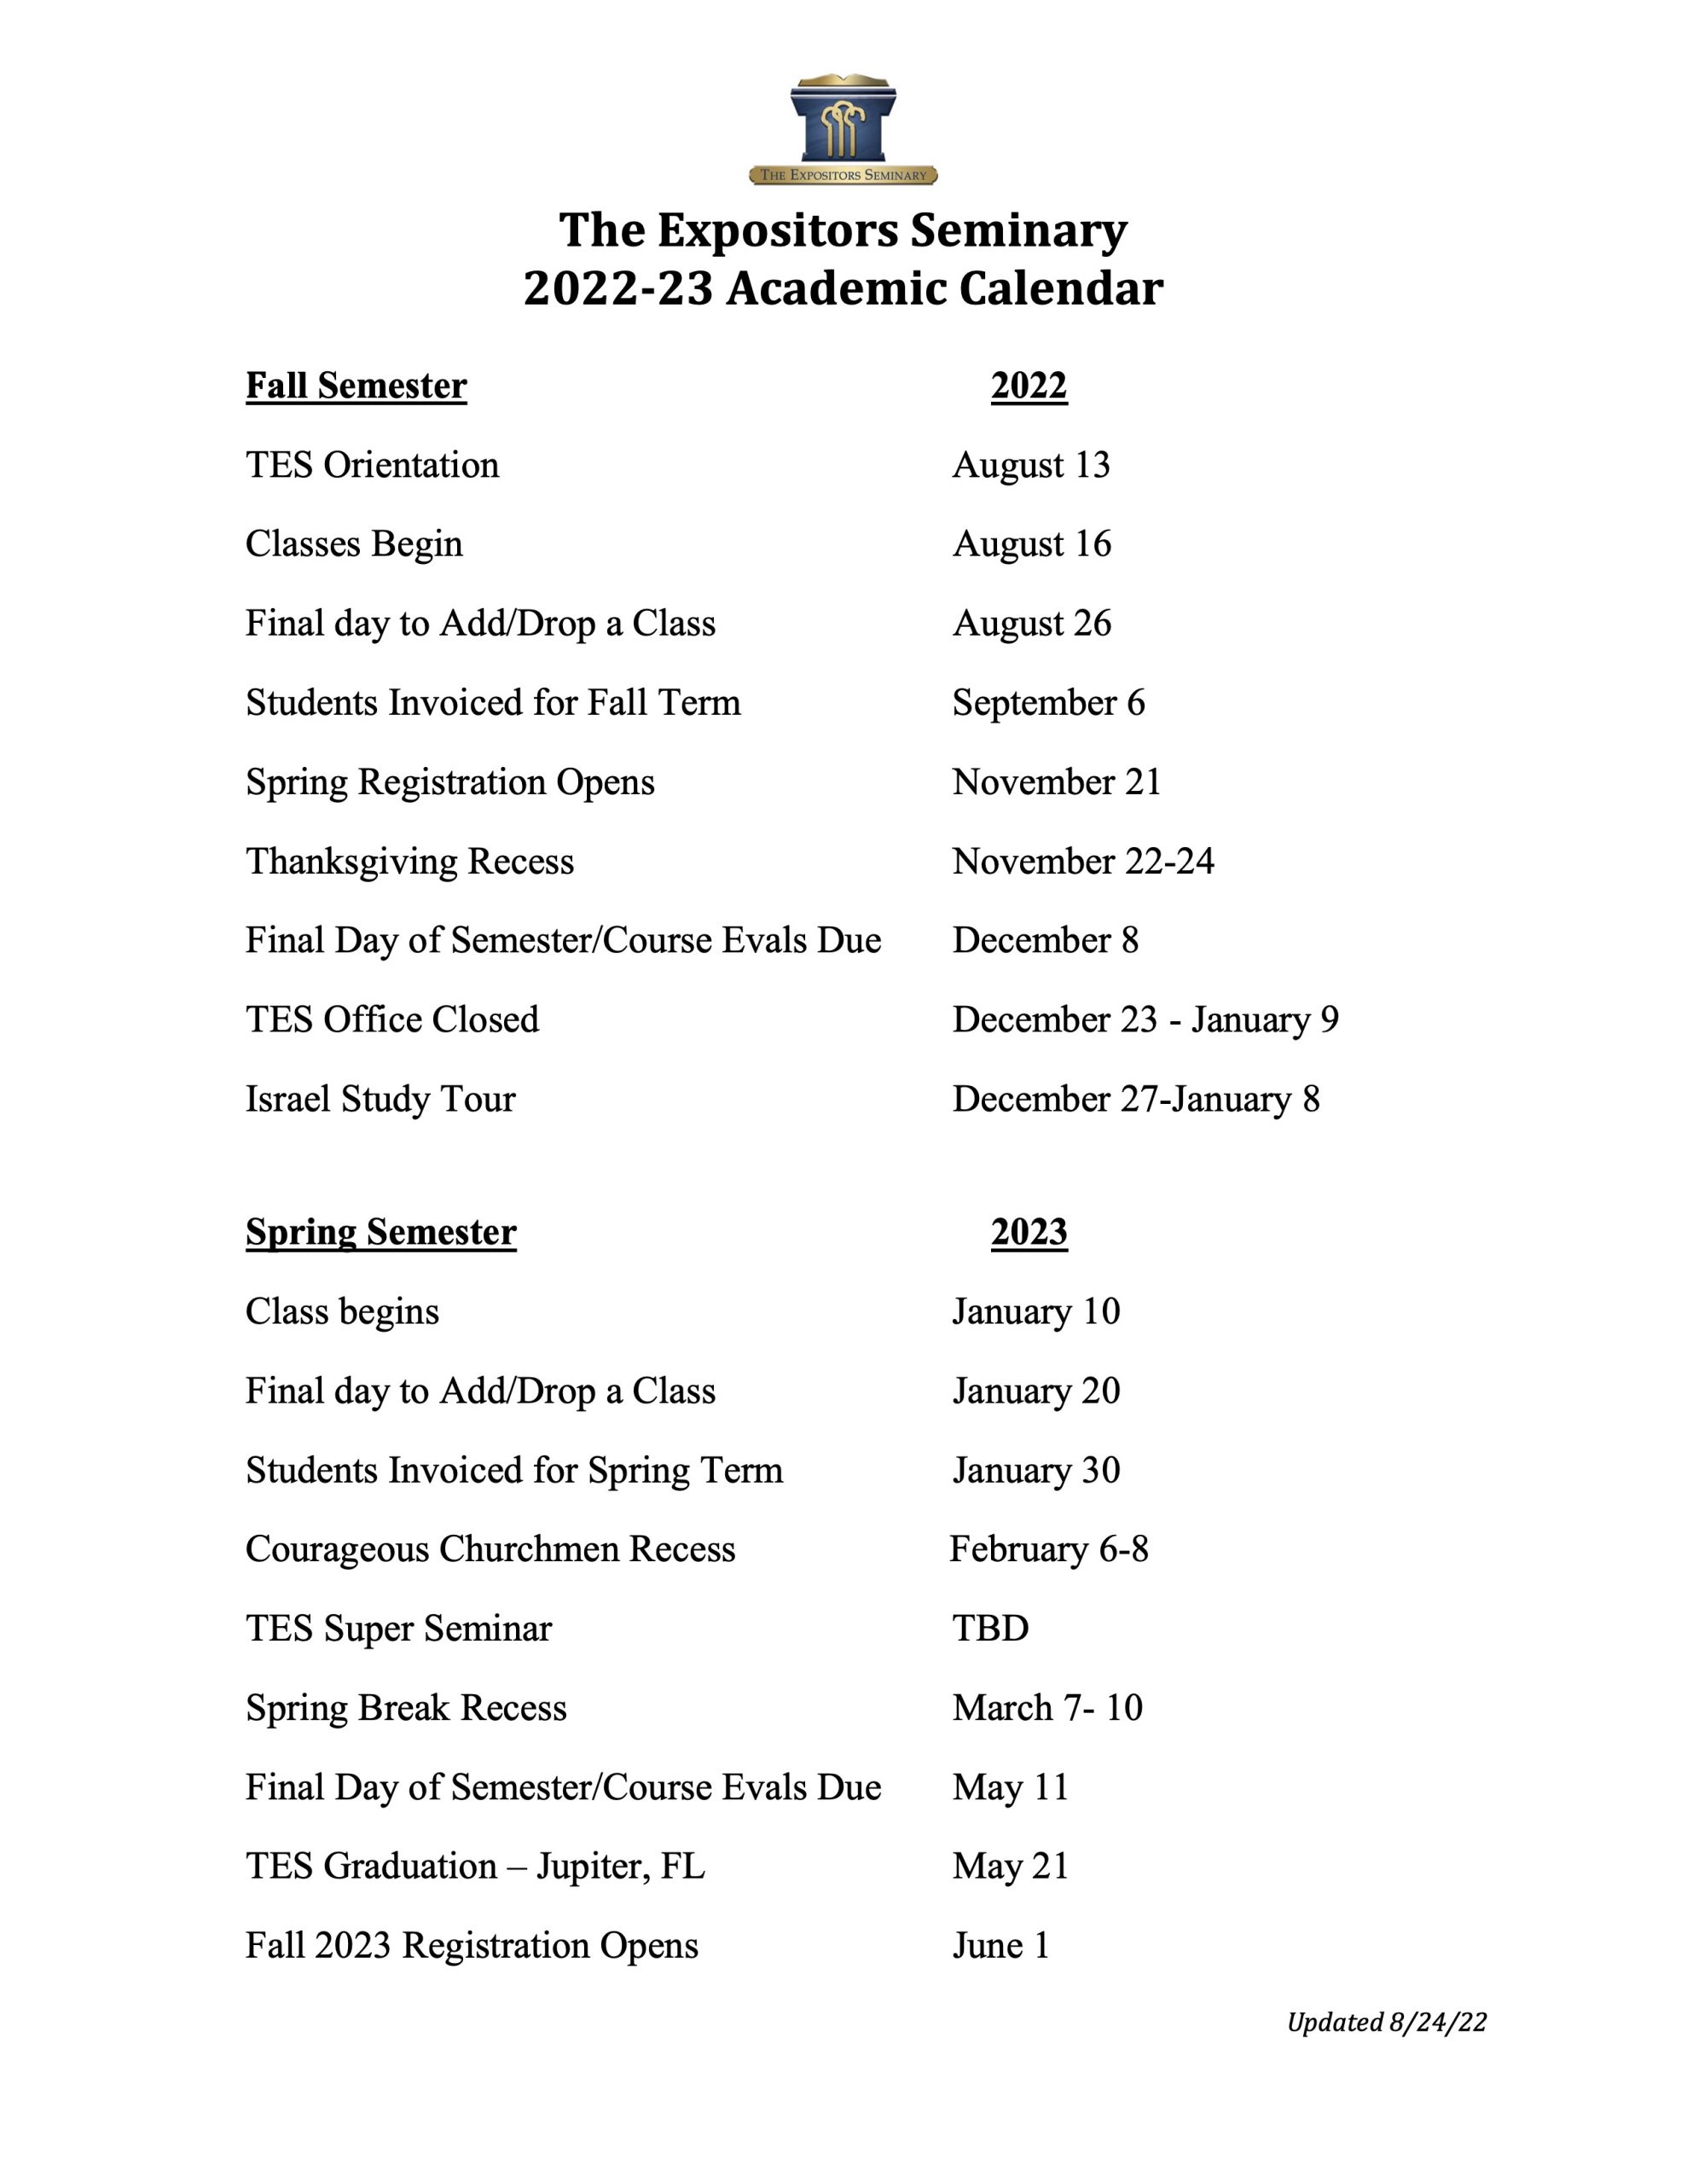 academic-calendar-expositors-seminary